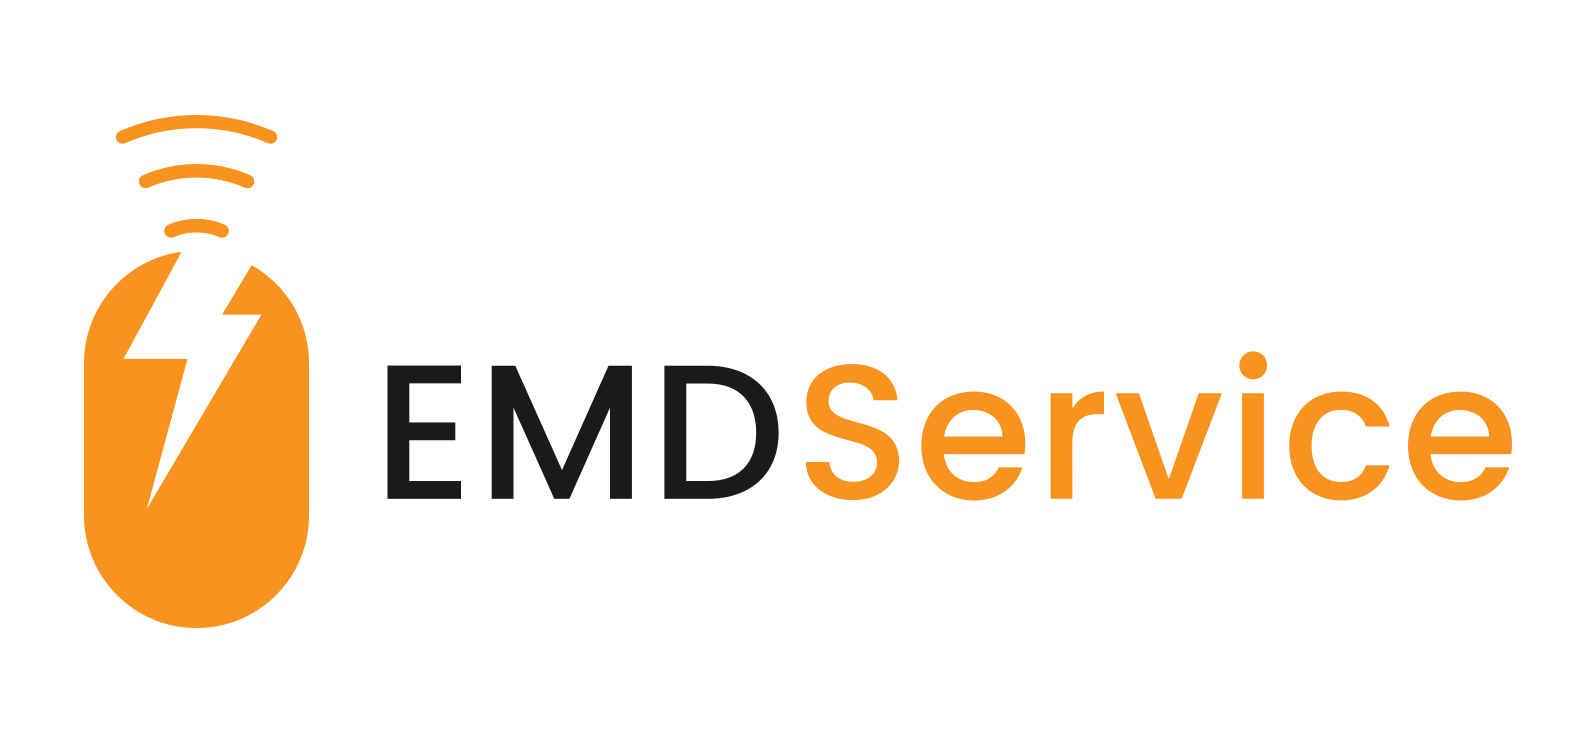 EMD service logo